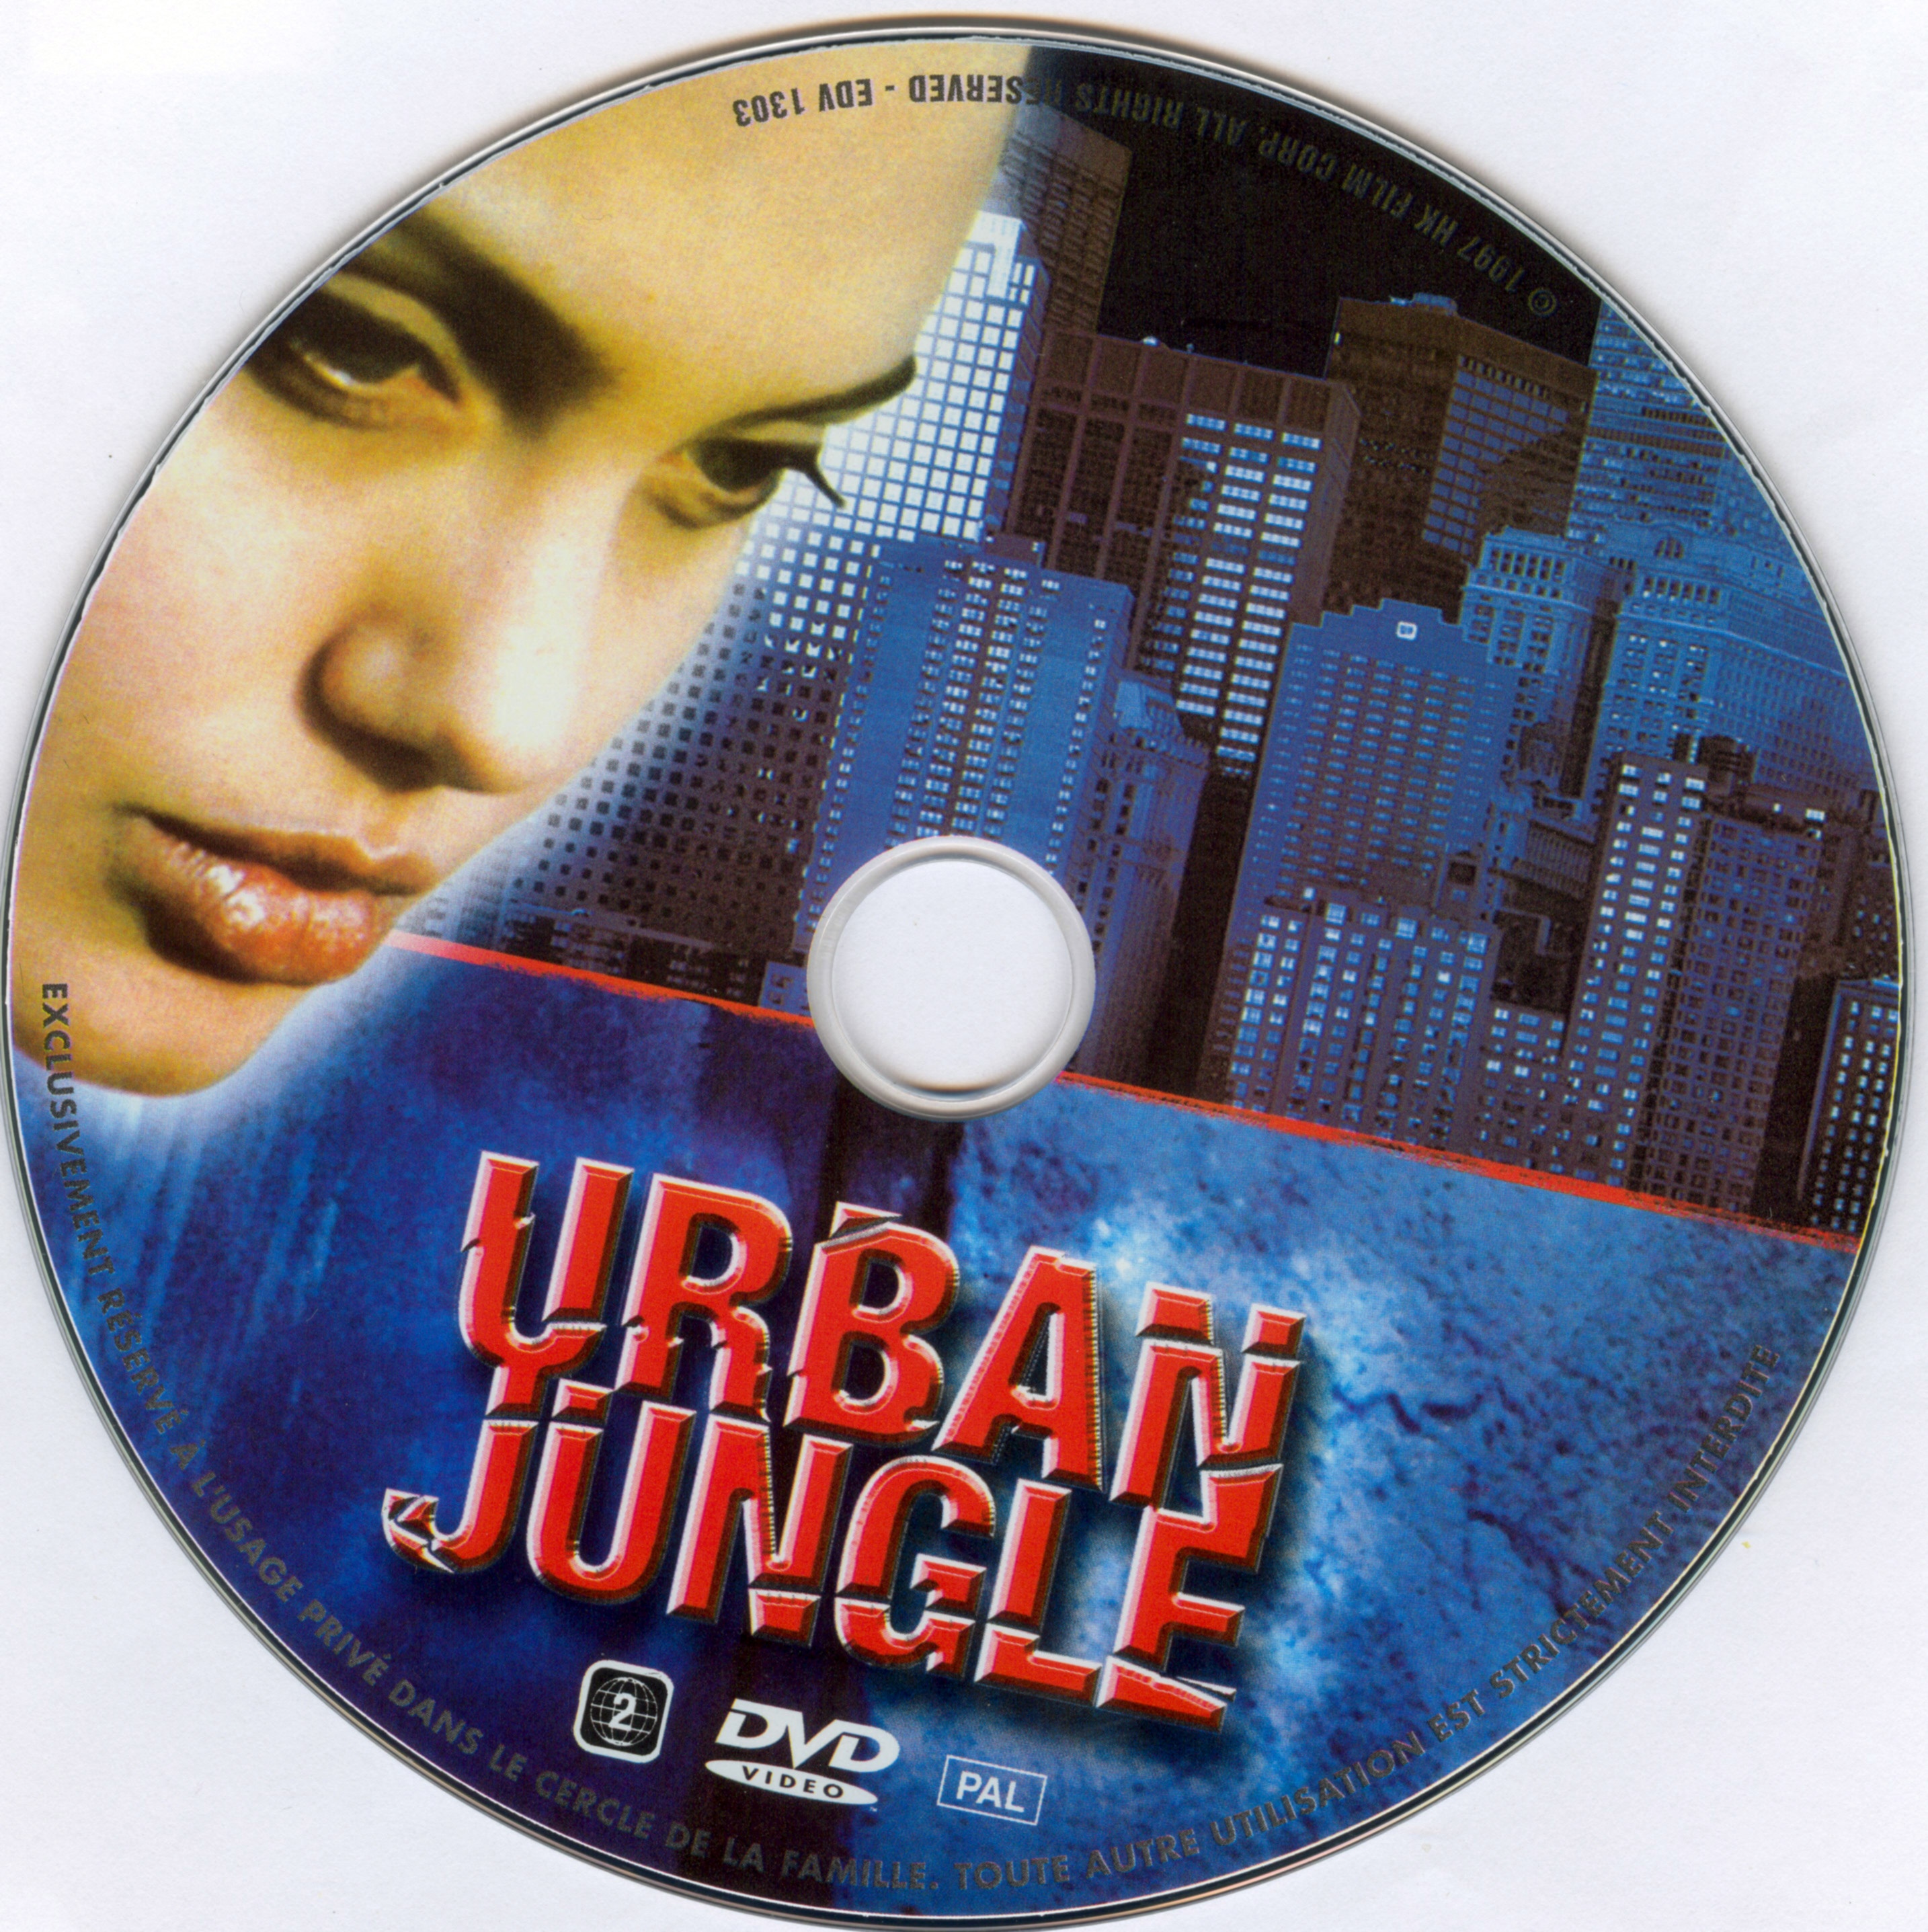 Urban jungle